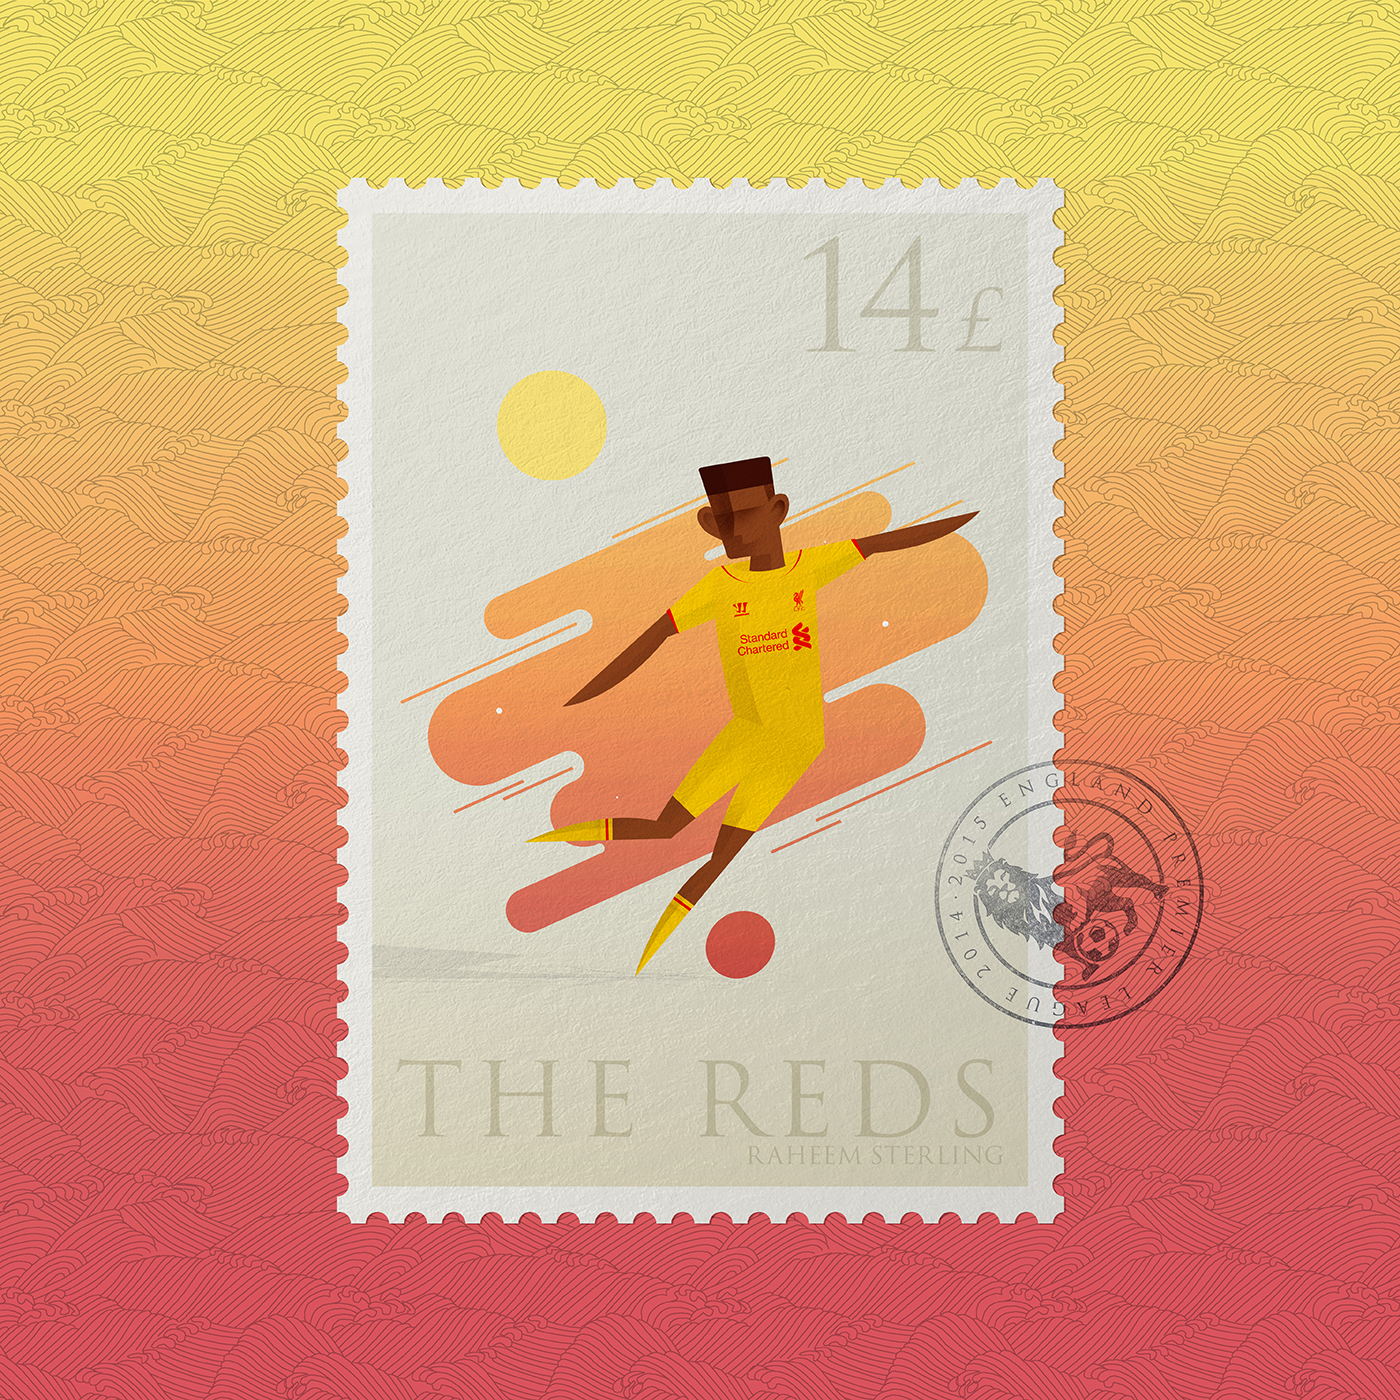 Premier League stamps Postage kompany alexis sanchez rooney sterling Schurrle adebayor arsenal gooners red devils man united Man City